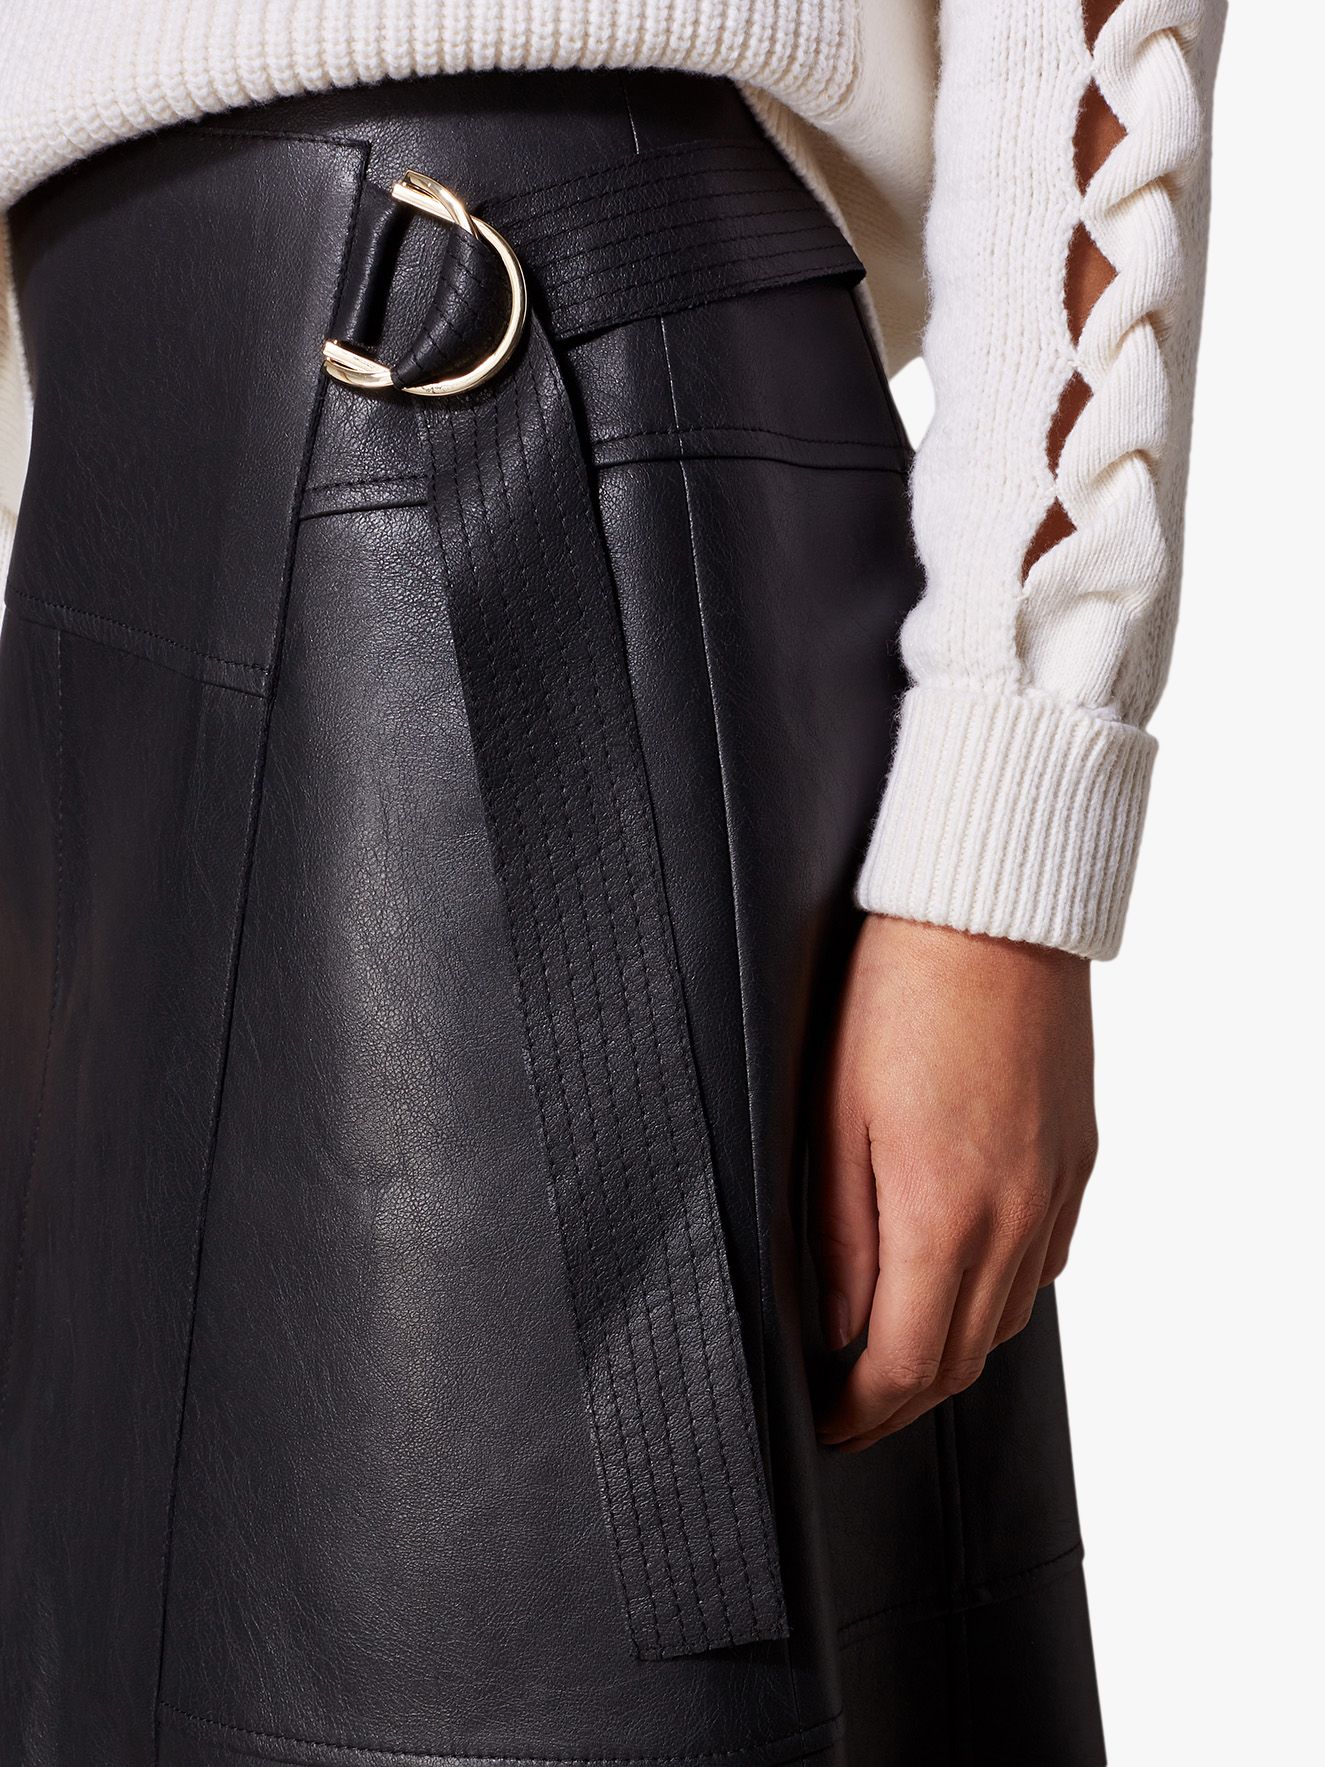 Karen Millen Faux Leather Wrap Skirt, Black at John Lewis & Partners